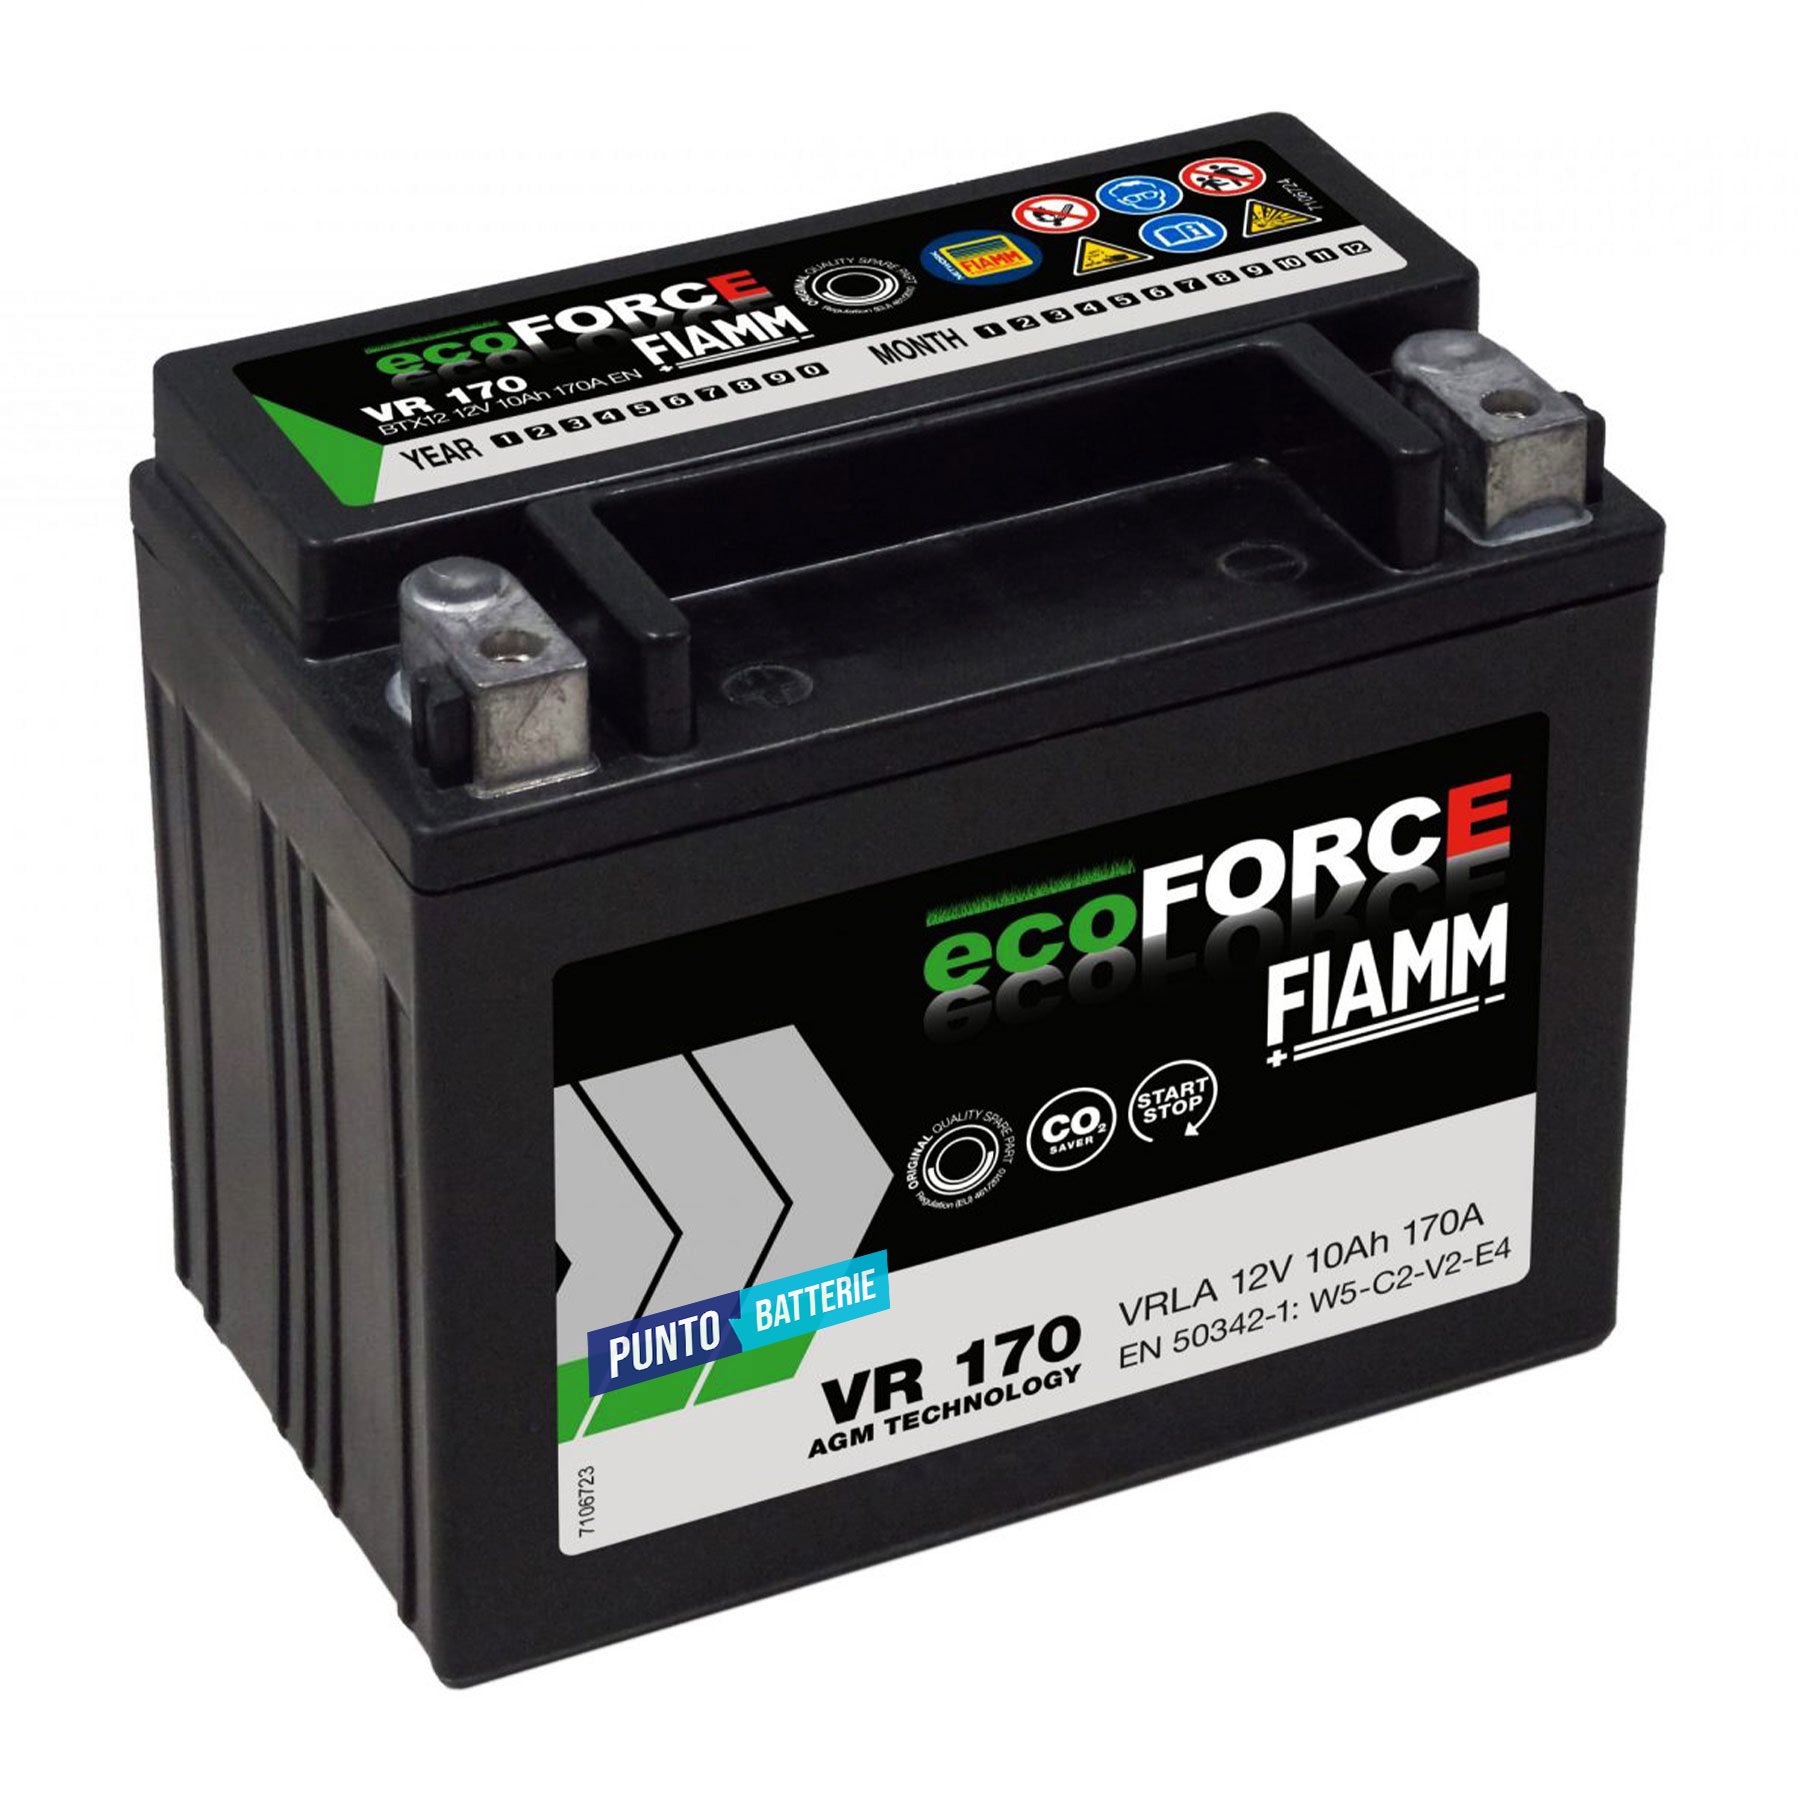 Batteria Fiamm TRN 45 - EcoFORCE AFB (12V, 45Ah, 360A) - Puntobatterie